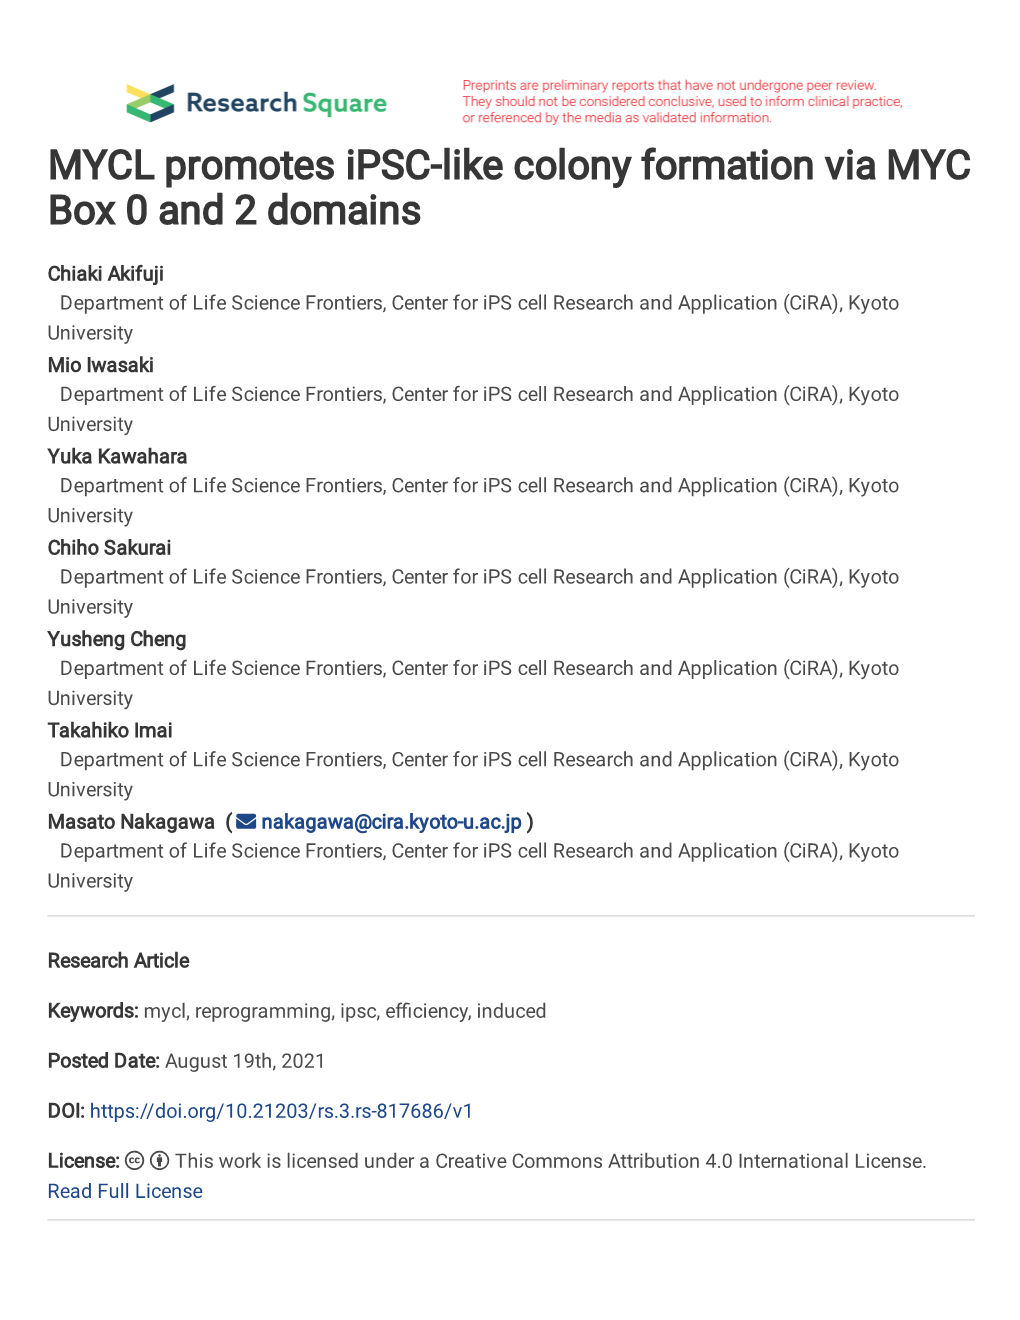 MYCL Promotes Ipsc-Like Colony Formation Via MYC Box 0 and 2 Domains